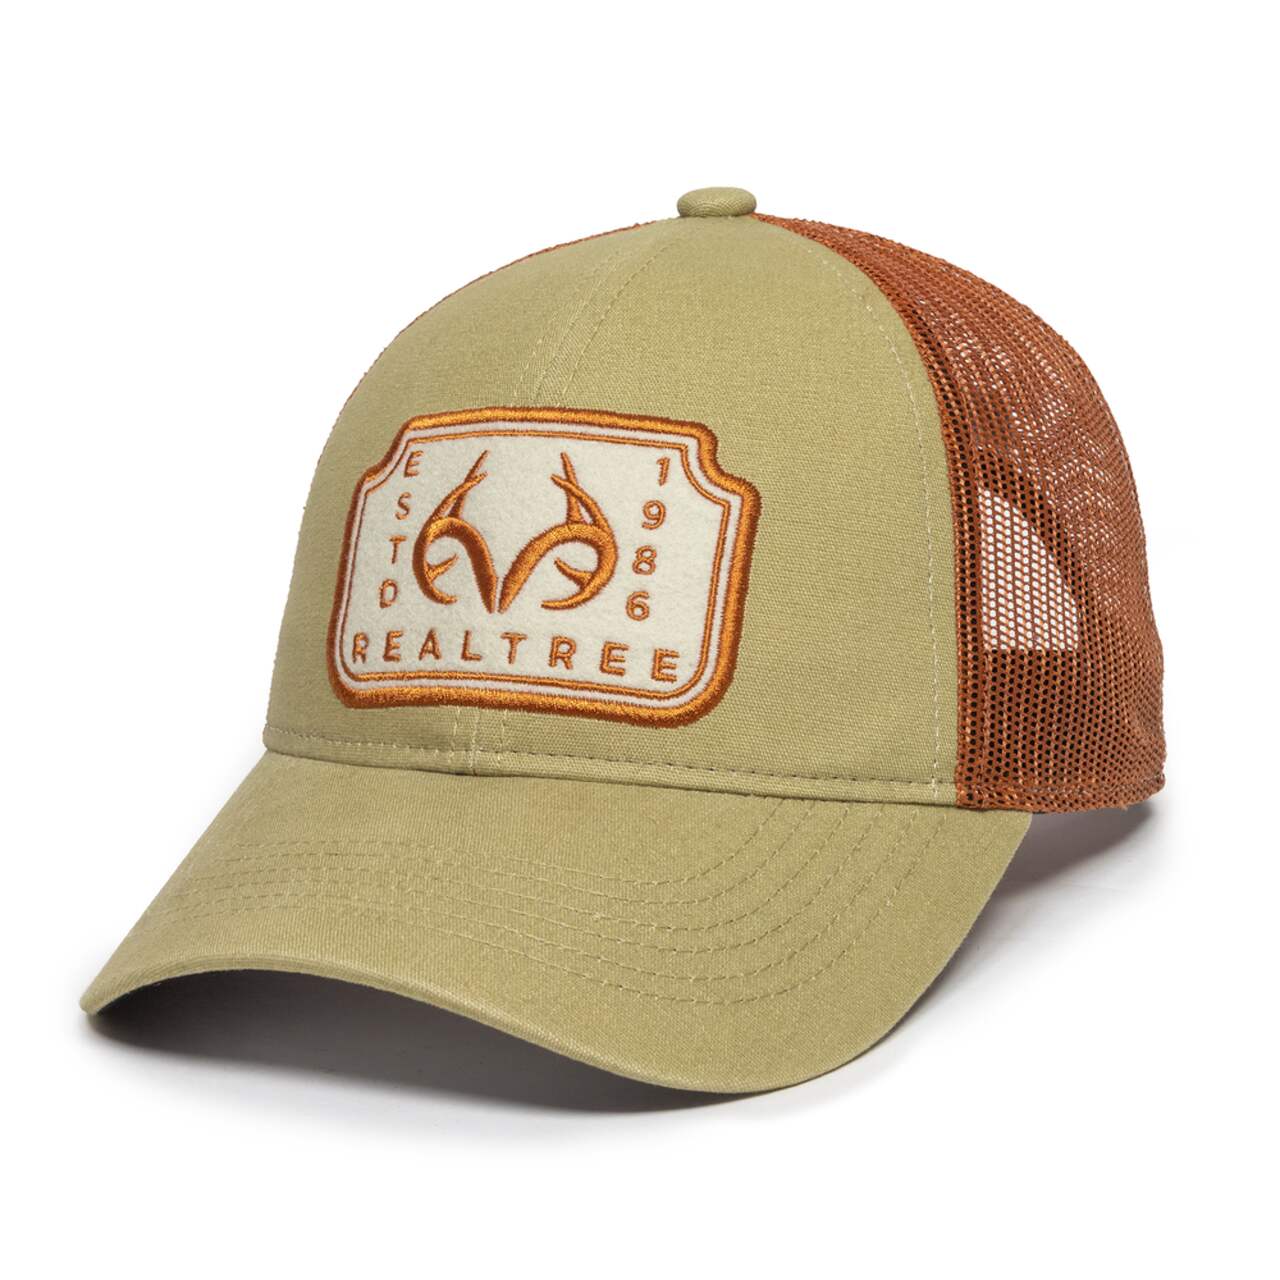 Realtree Casual Mesh Back Hat, Burnt Orange